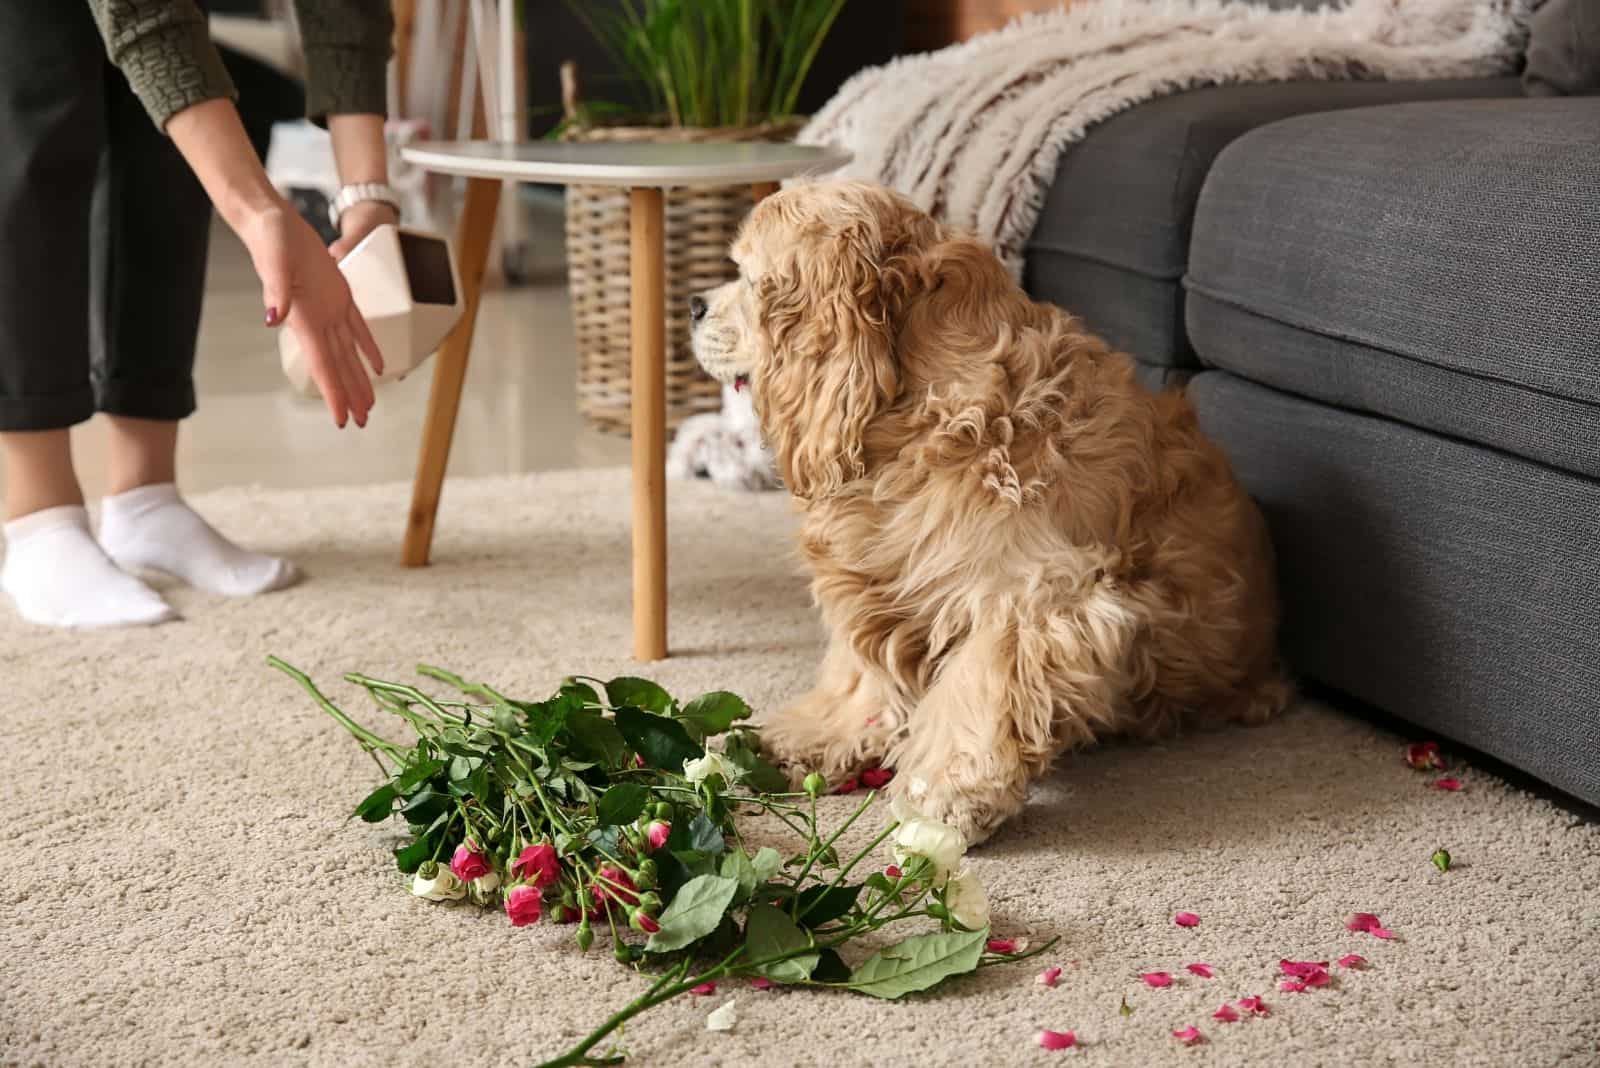 owner scolding dog breaking the vase in the livingroom